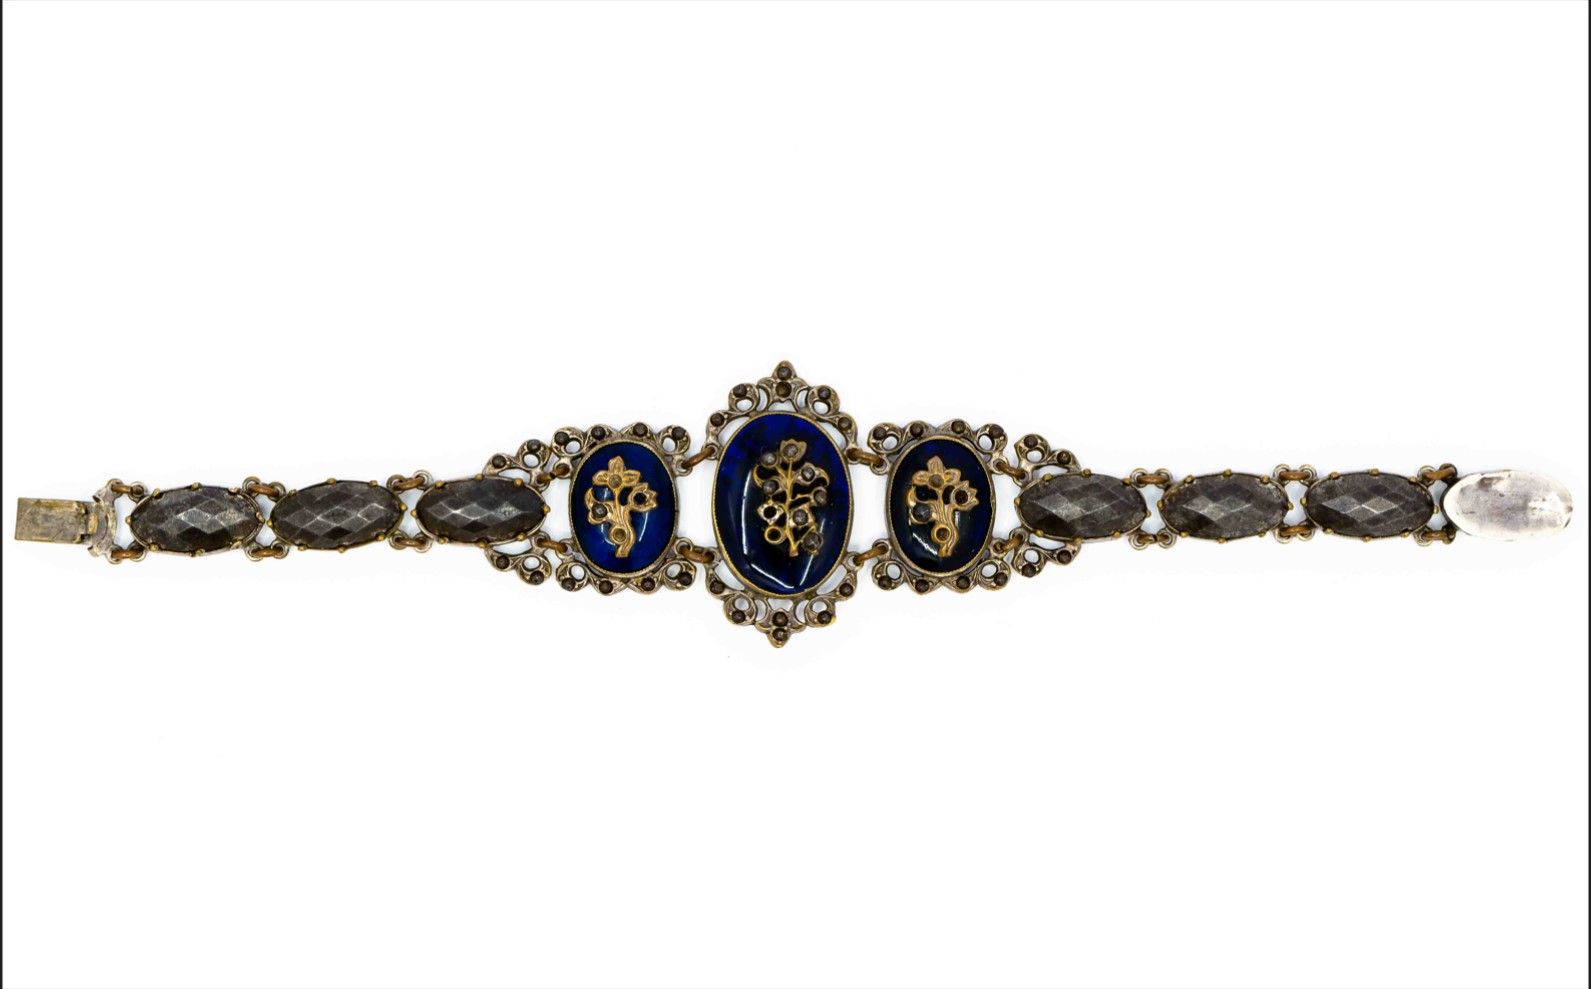 Null 
金属手镯，由三个蓝色珐琅徽章组成，上面有花卉图案，并镶嵌有玛瑙。




失踪




拿破仑三世